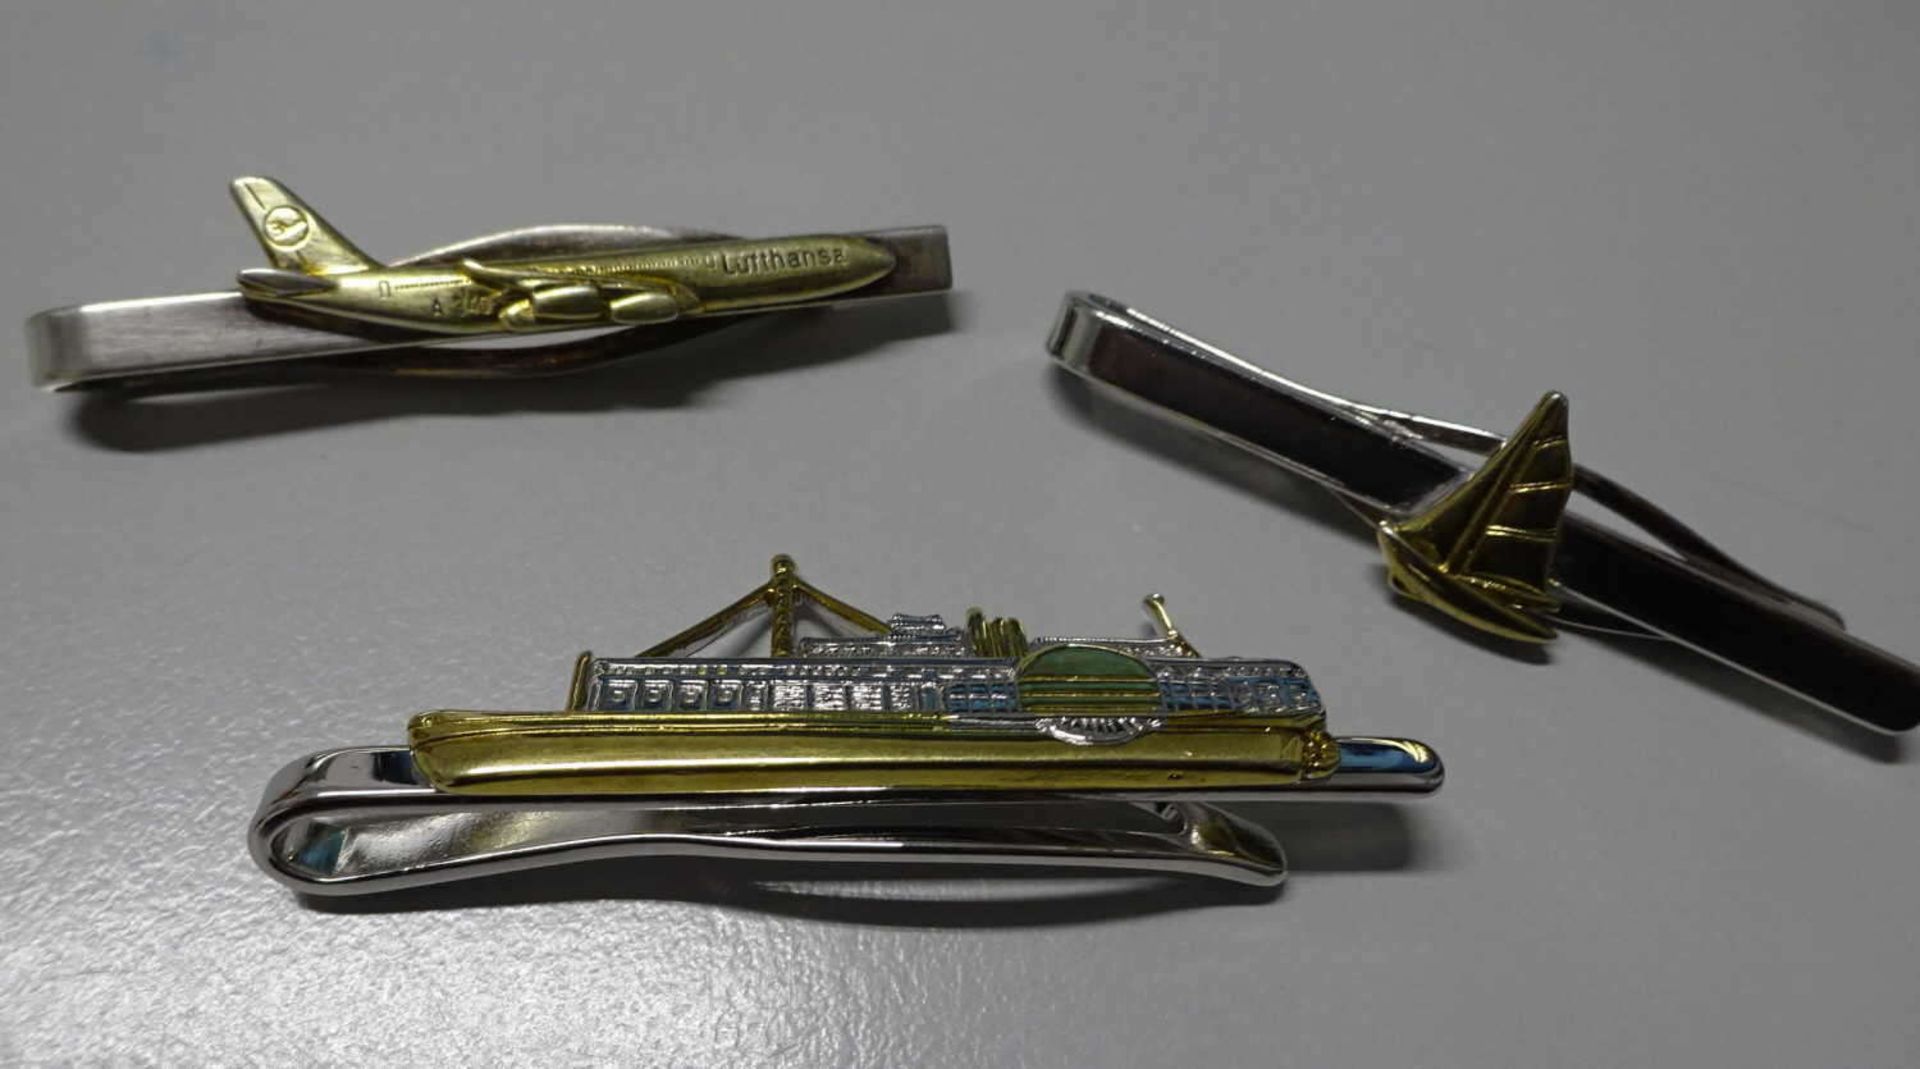 3 Krawattennadeln, Silber, 1x Segelboot, 1x Flugzeug, 1x Schaufelraddampfer. Teilweise vergoldet.